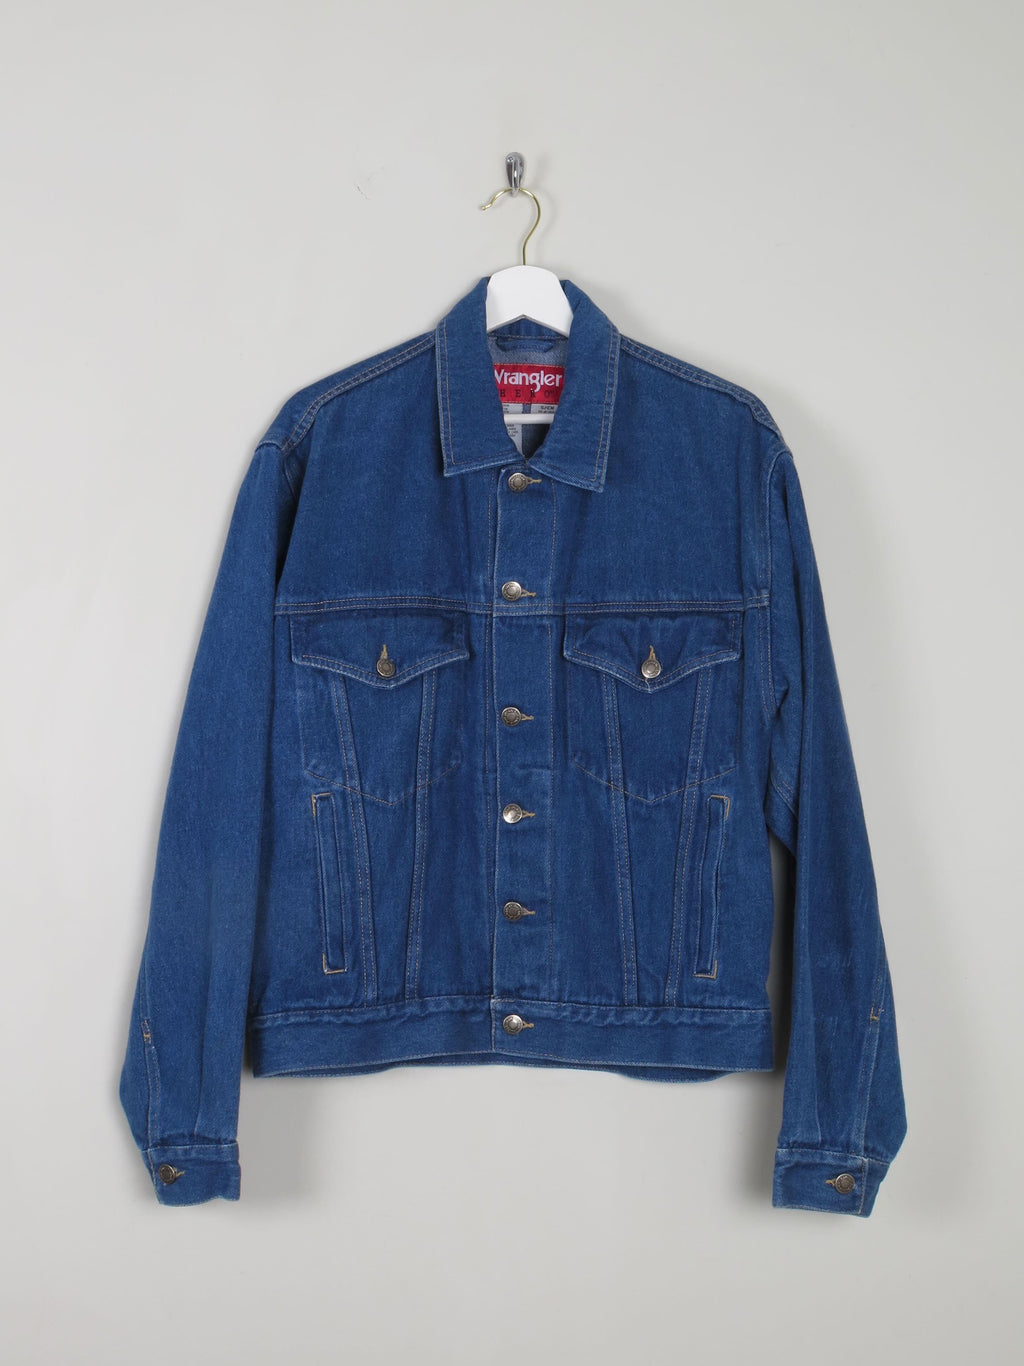 Men's Vintage Wrangler Denim Jacket S - The Harlequin